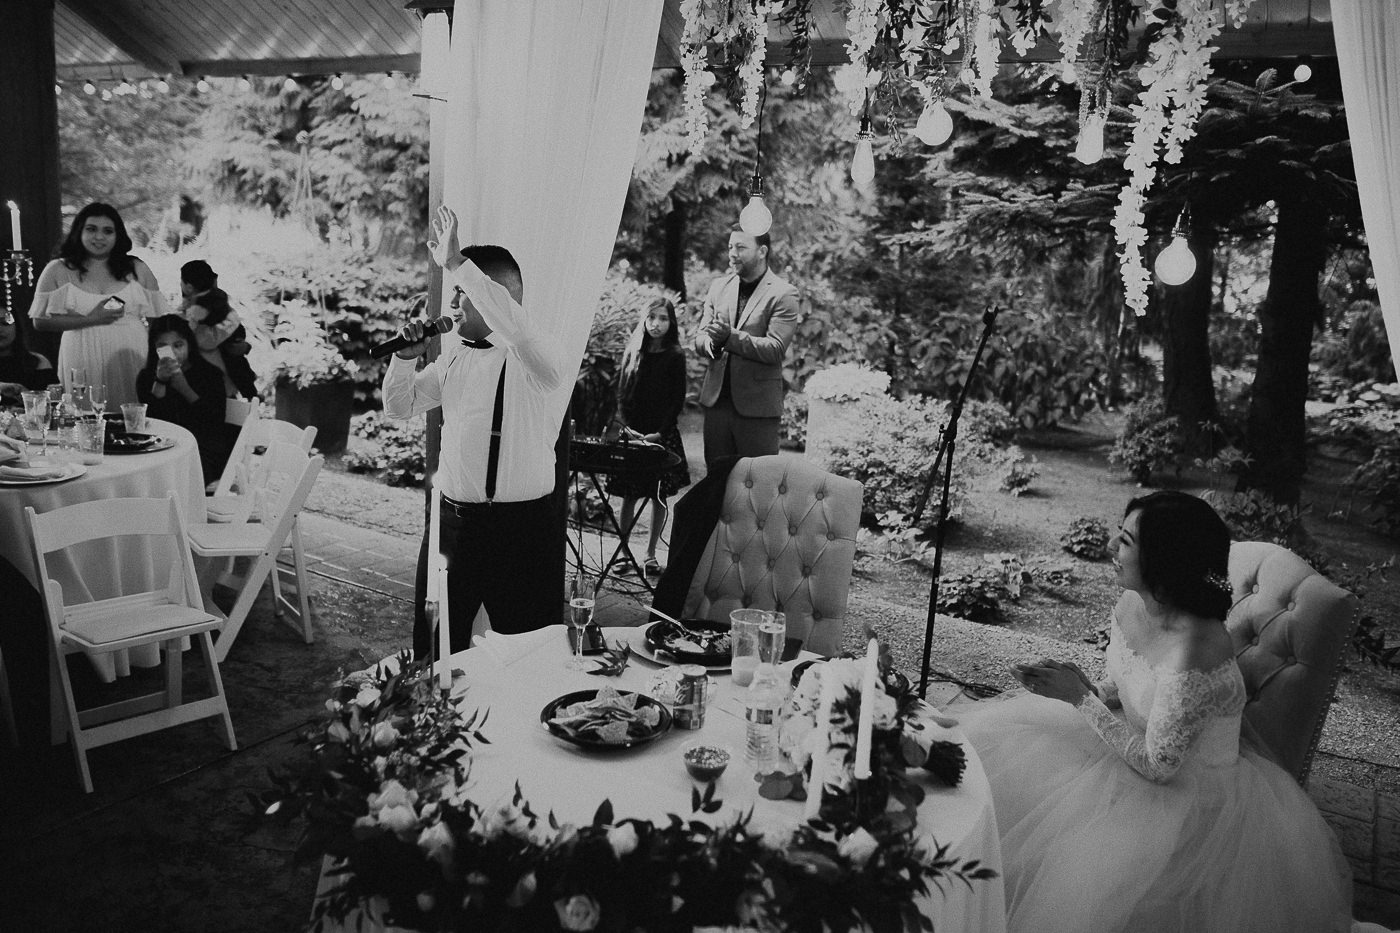  Seattle Wedding Photographer - - Evergreen Gardens, Arlington, WA - Seattle Engagement Photographer - Seattle Elopement Photographer - Arlington Wedding Photographer - Tacoma Wedding - Photographer - Bellevue Wedding Photographer - Wenatchee Wedding